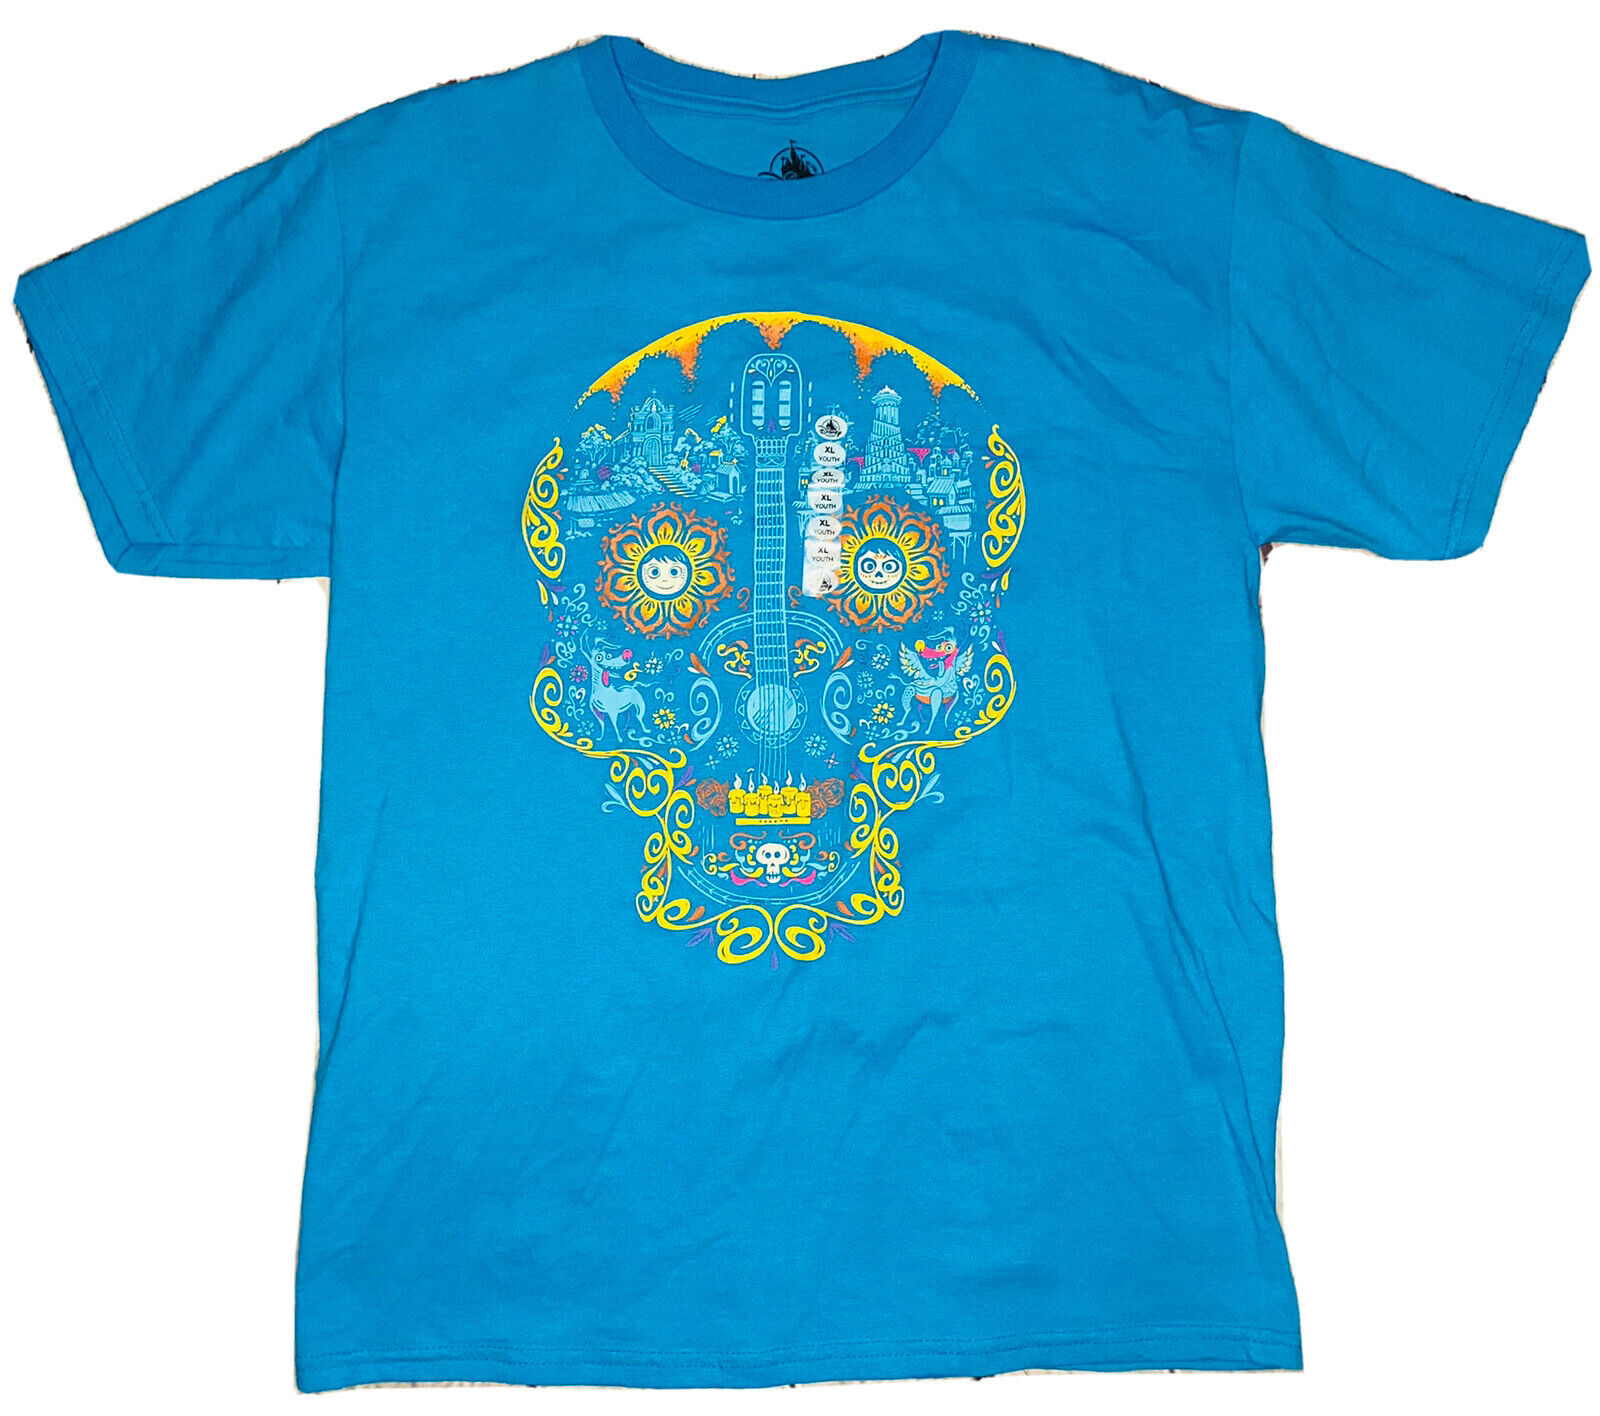 *NWOT* Disney Parks Pixar COCO Sugar Skull Blue Youth Shirt; Size XL